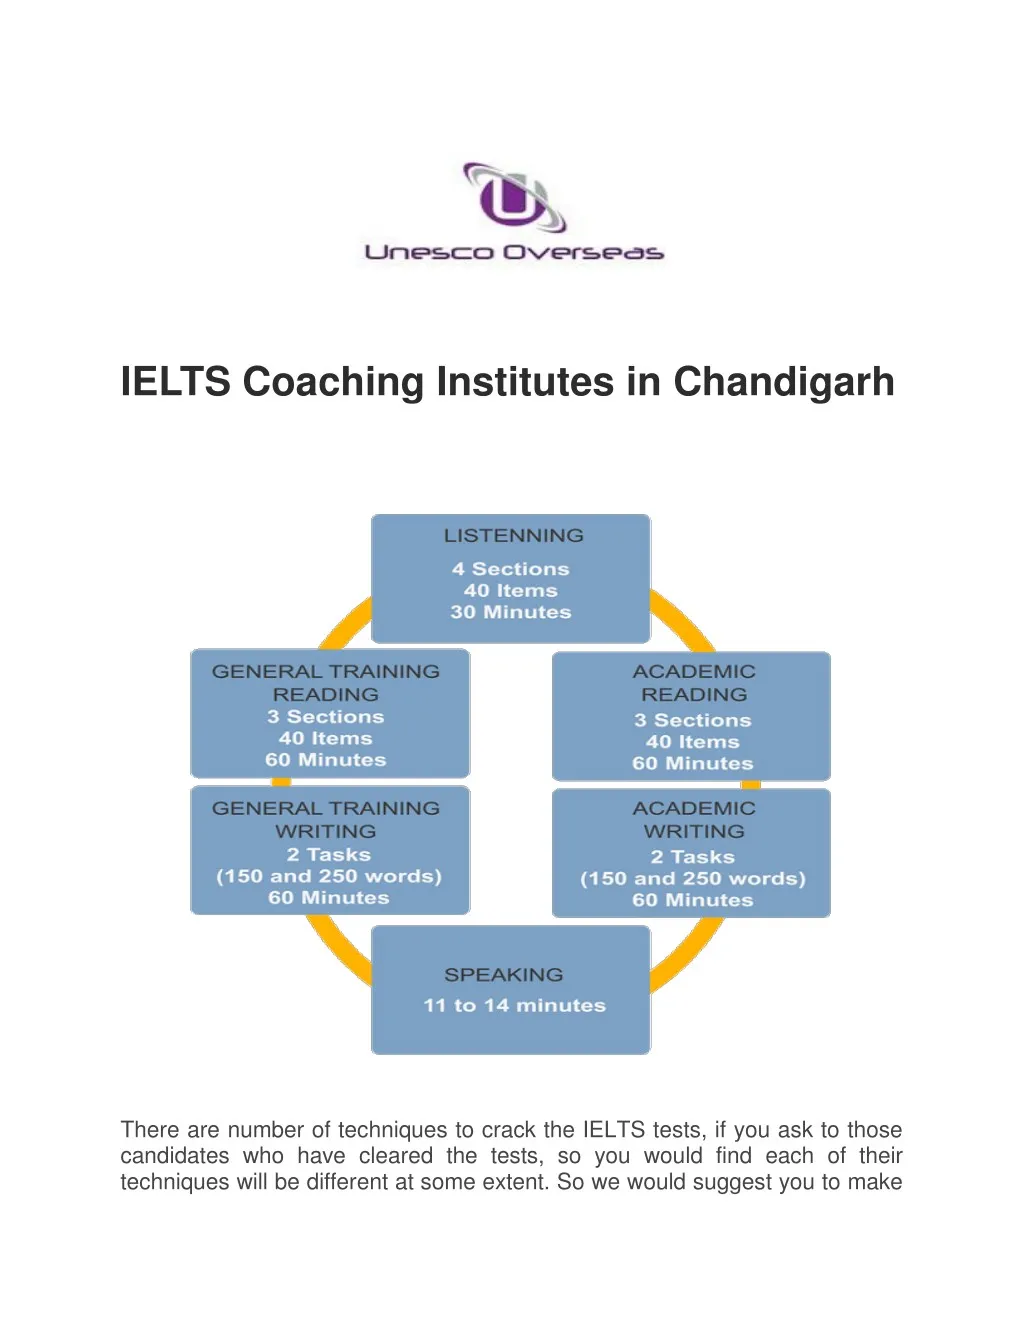 ielts coaching institutes in chandigarh